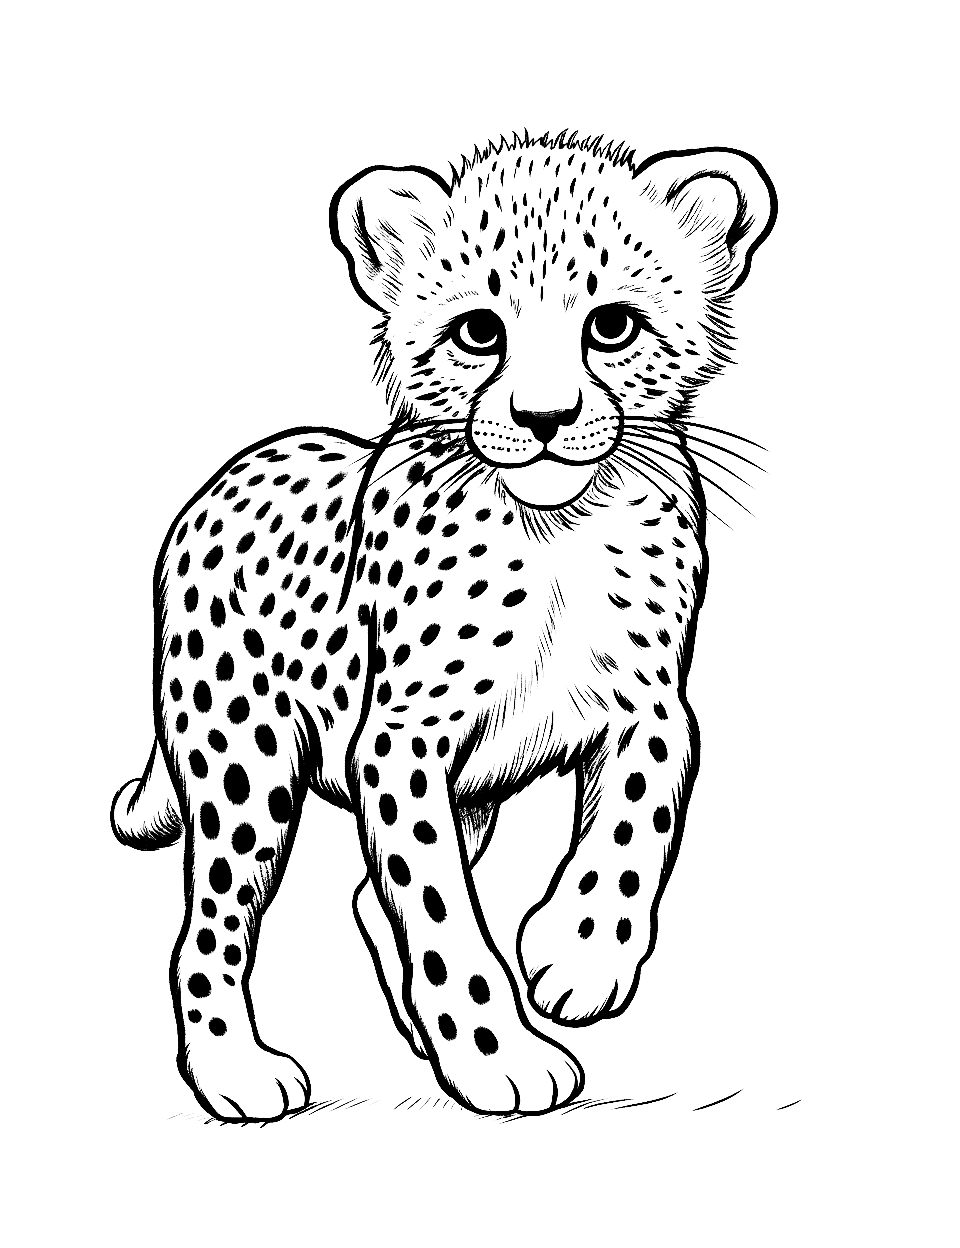 Cheetah Cub Coloring Page - A playful scene of a cheetah cub.